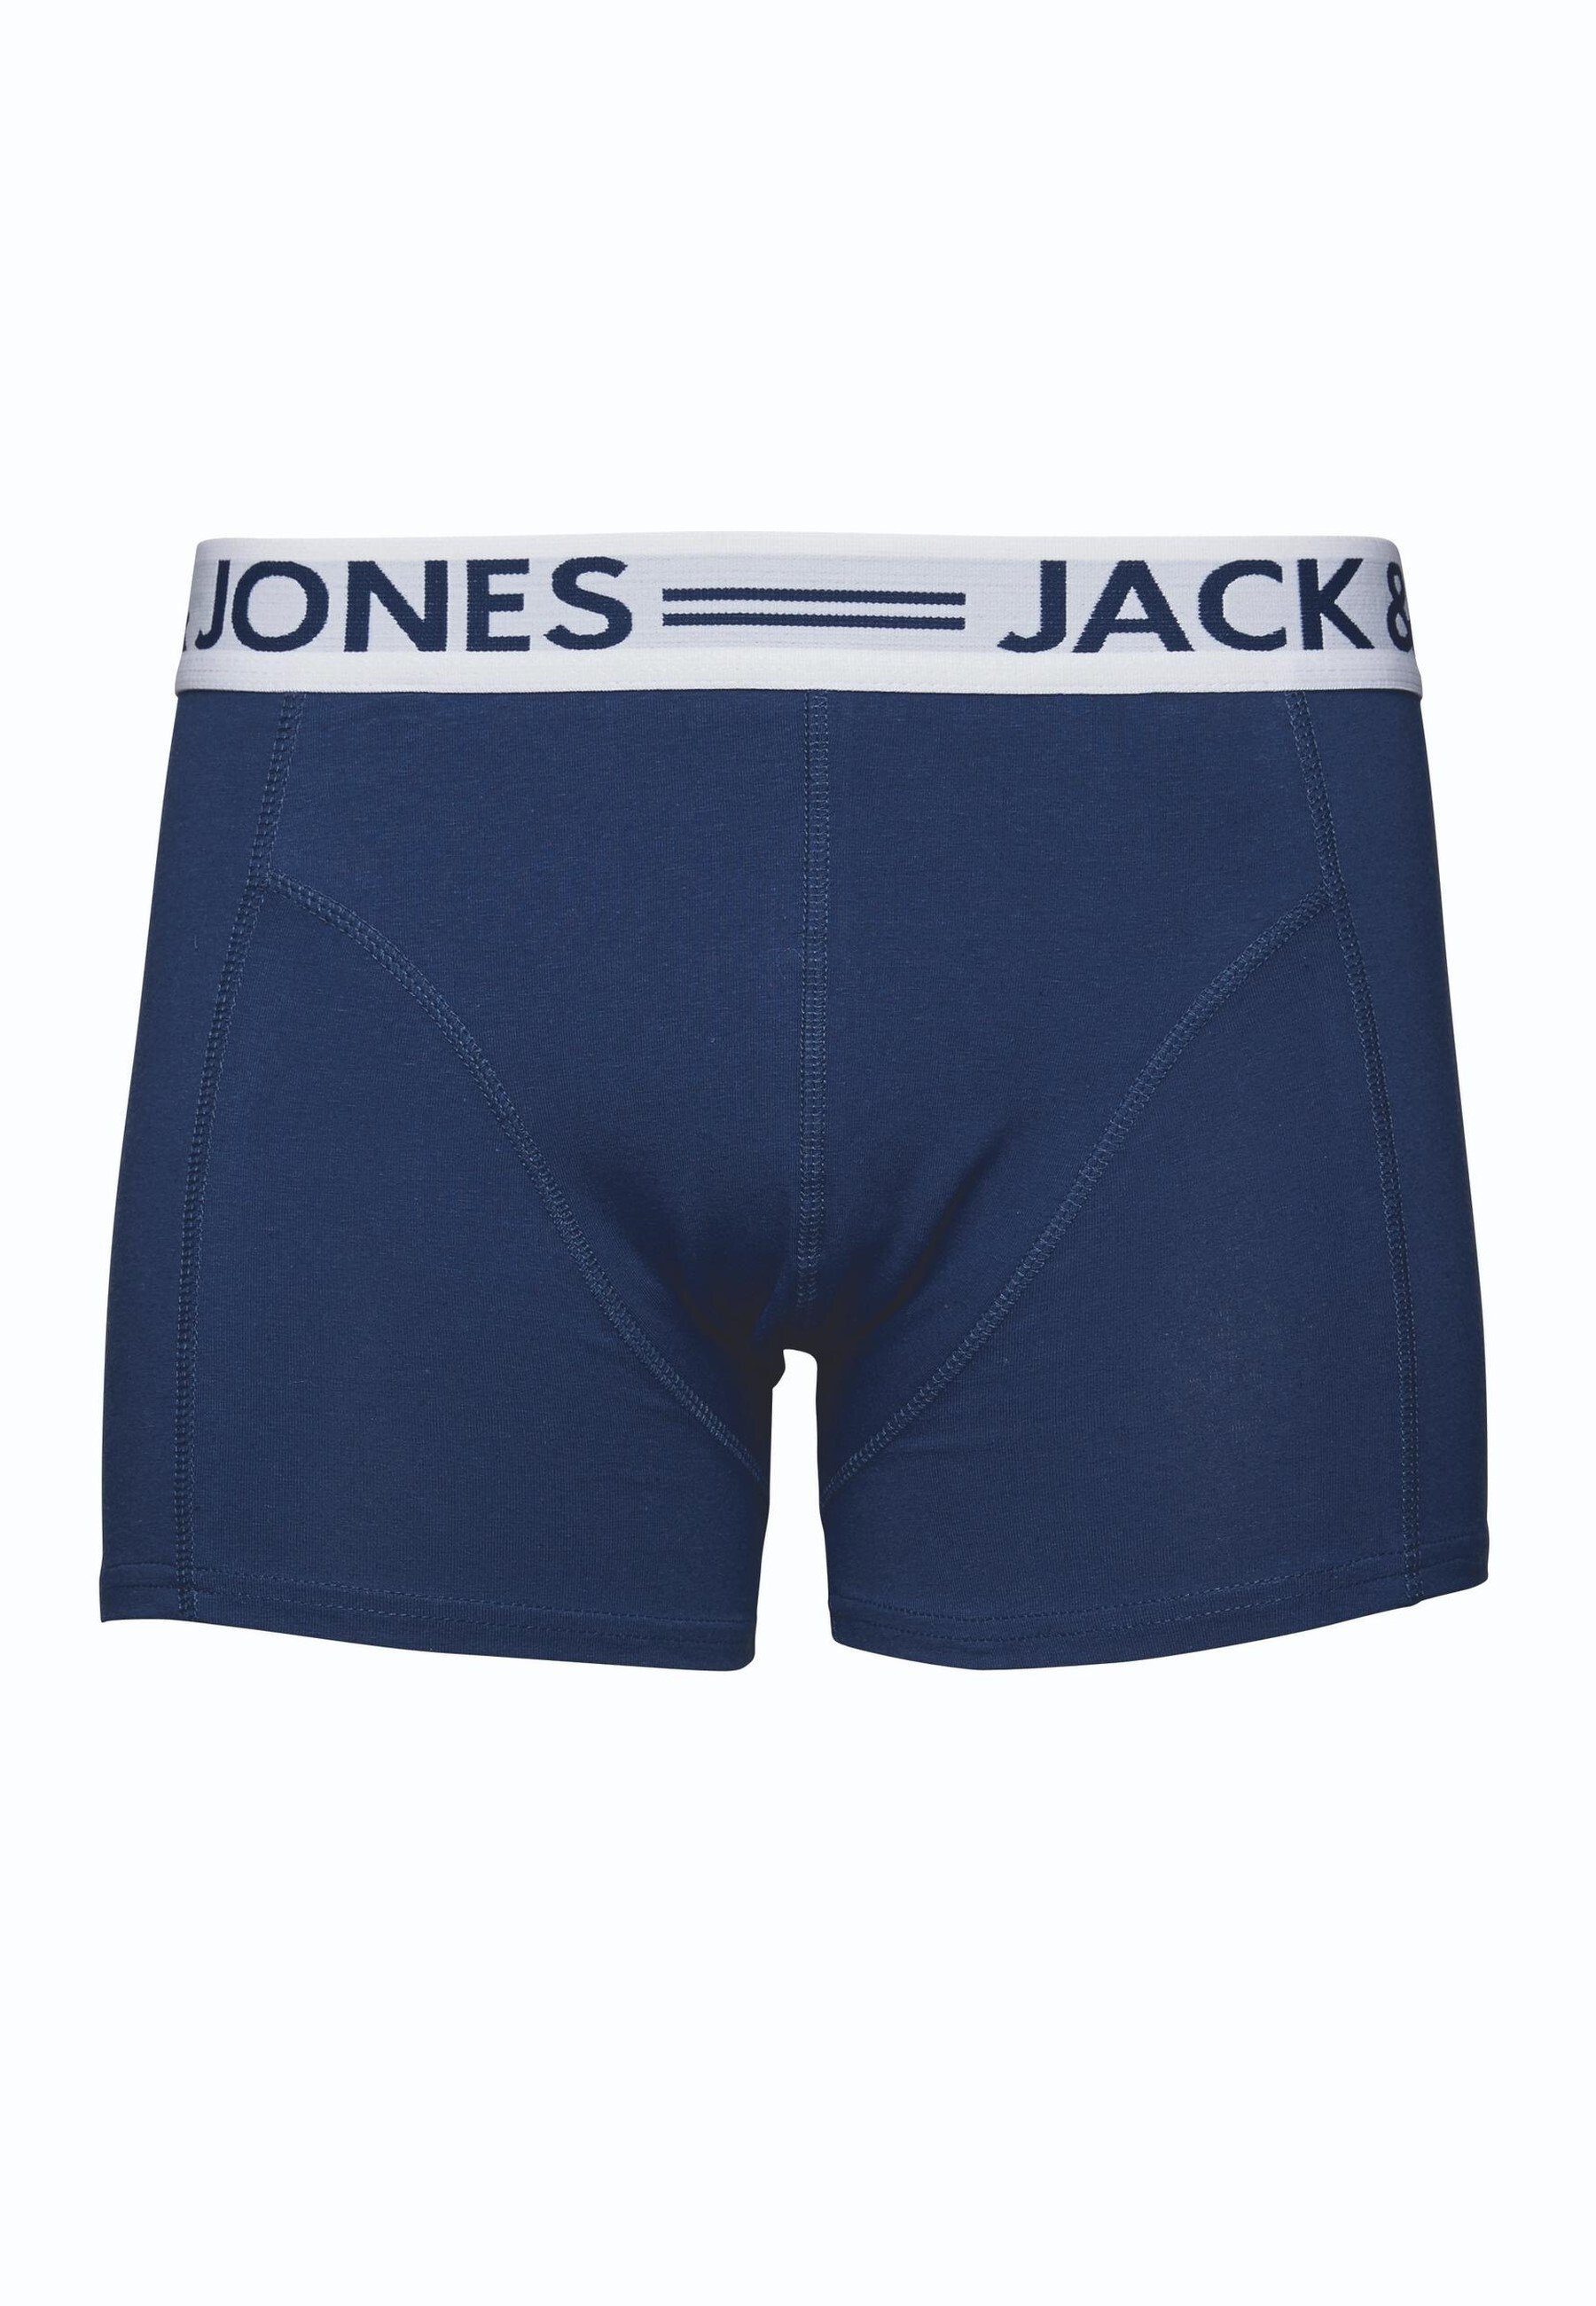 Sense blau & Boxershorts Unterhose Trunks Jack Jones